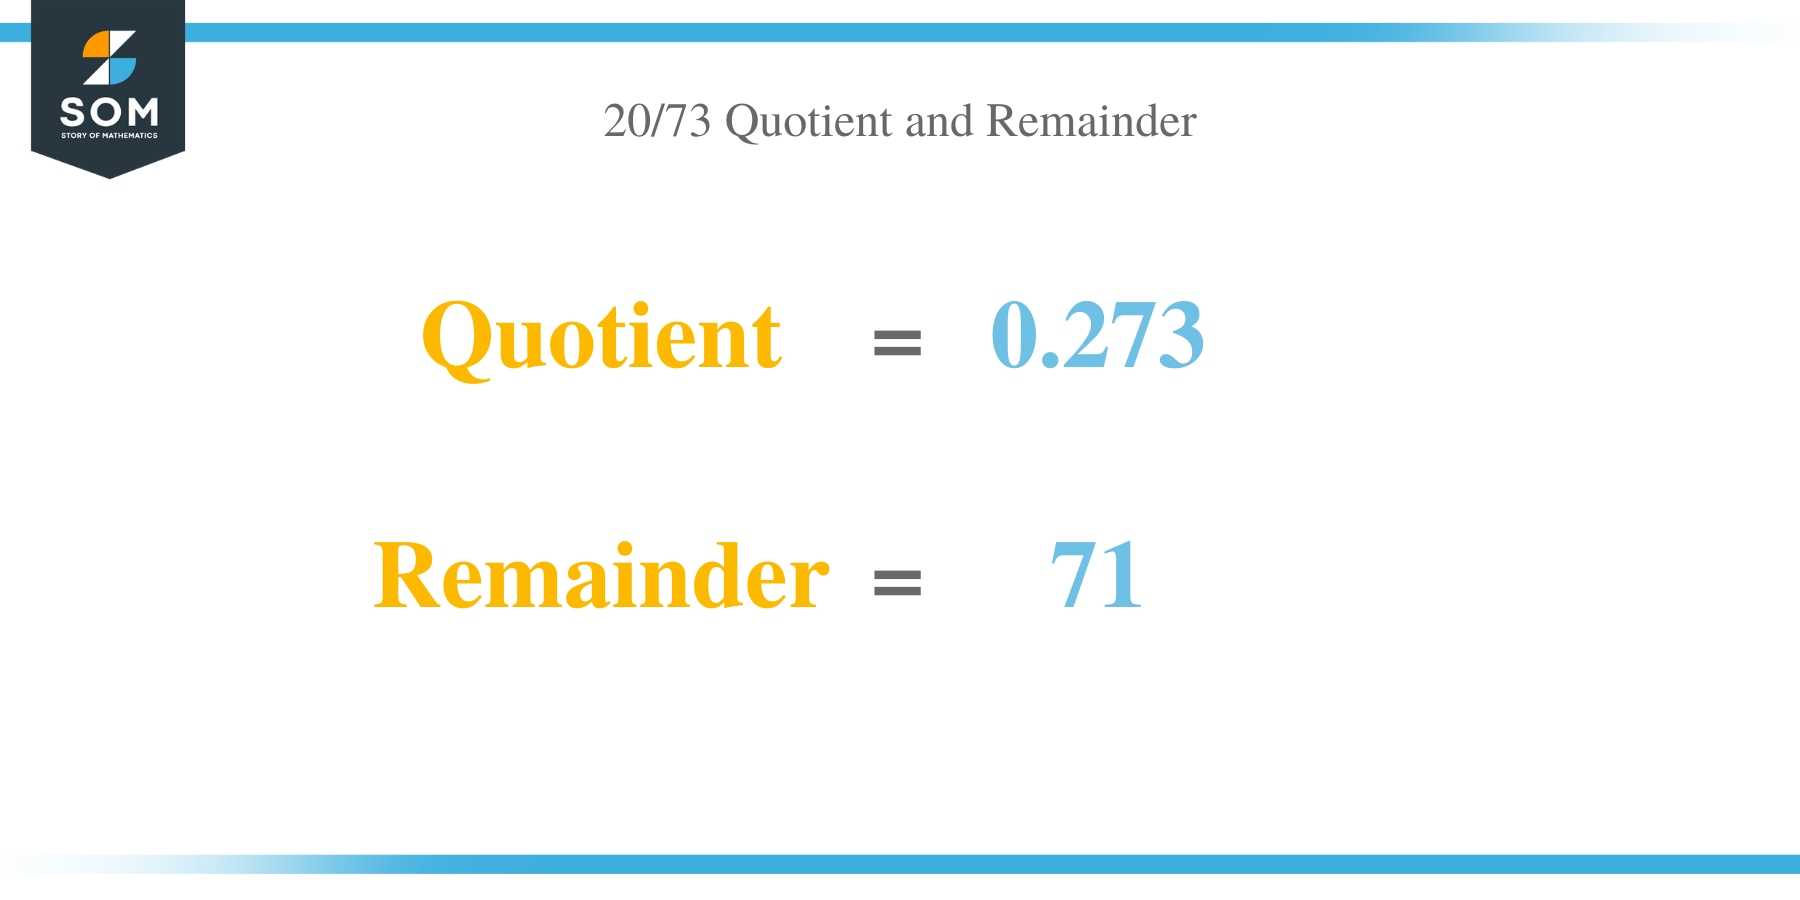 Quotient and Remainder of 20 per 73